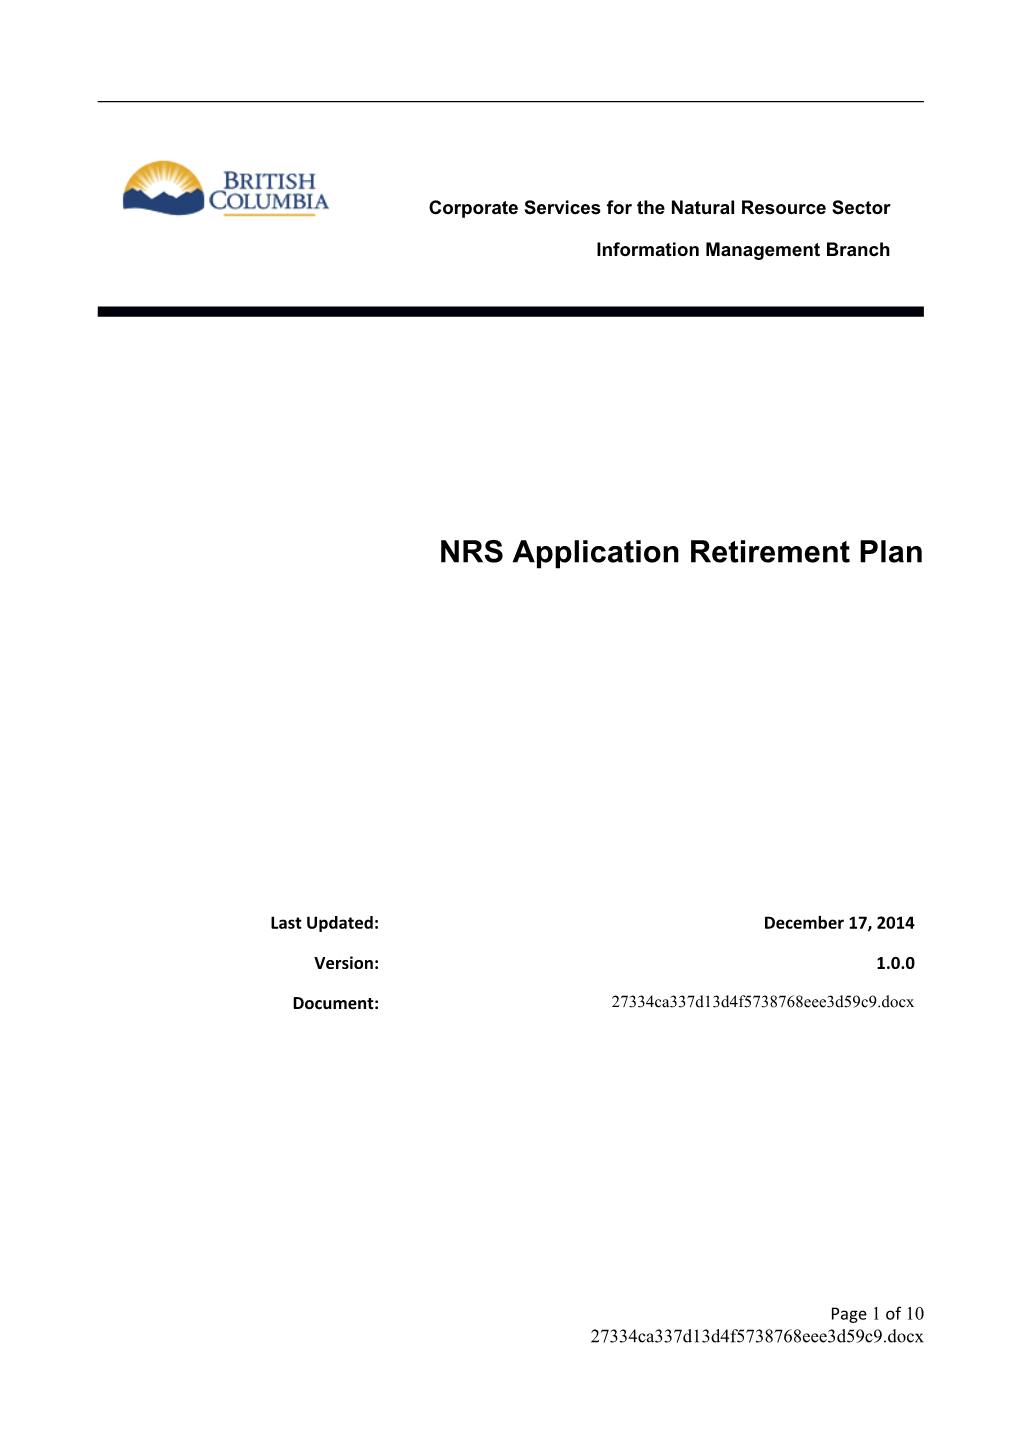 NRS Application Retirement Plan